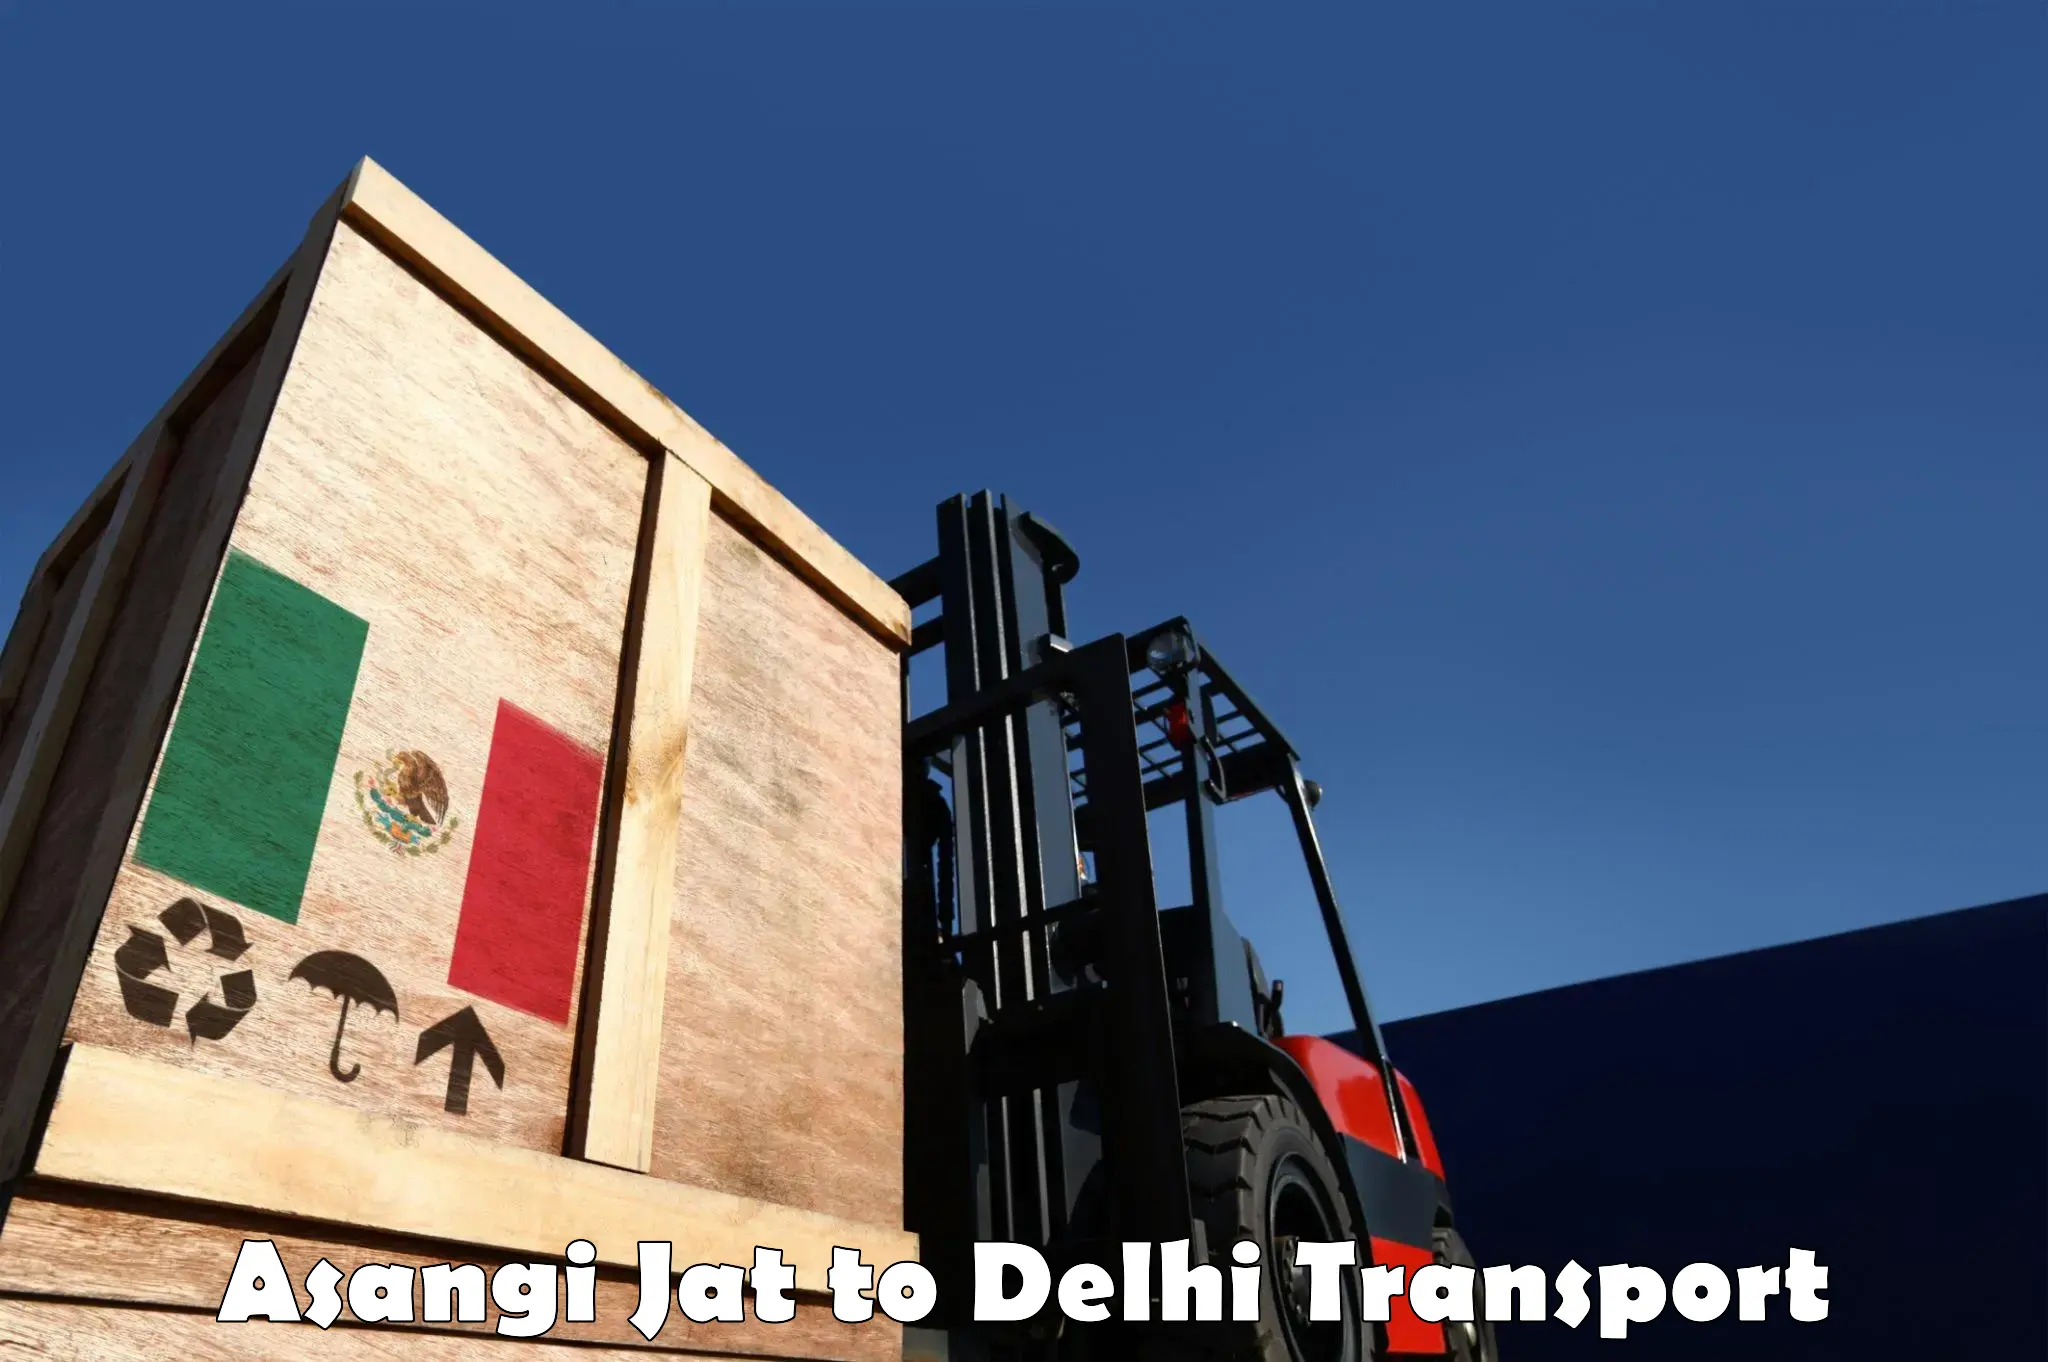 Daily transport service Asangi Jat to East Delhi